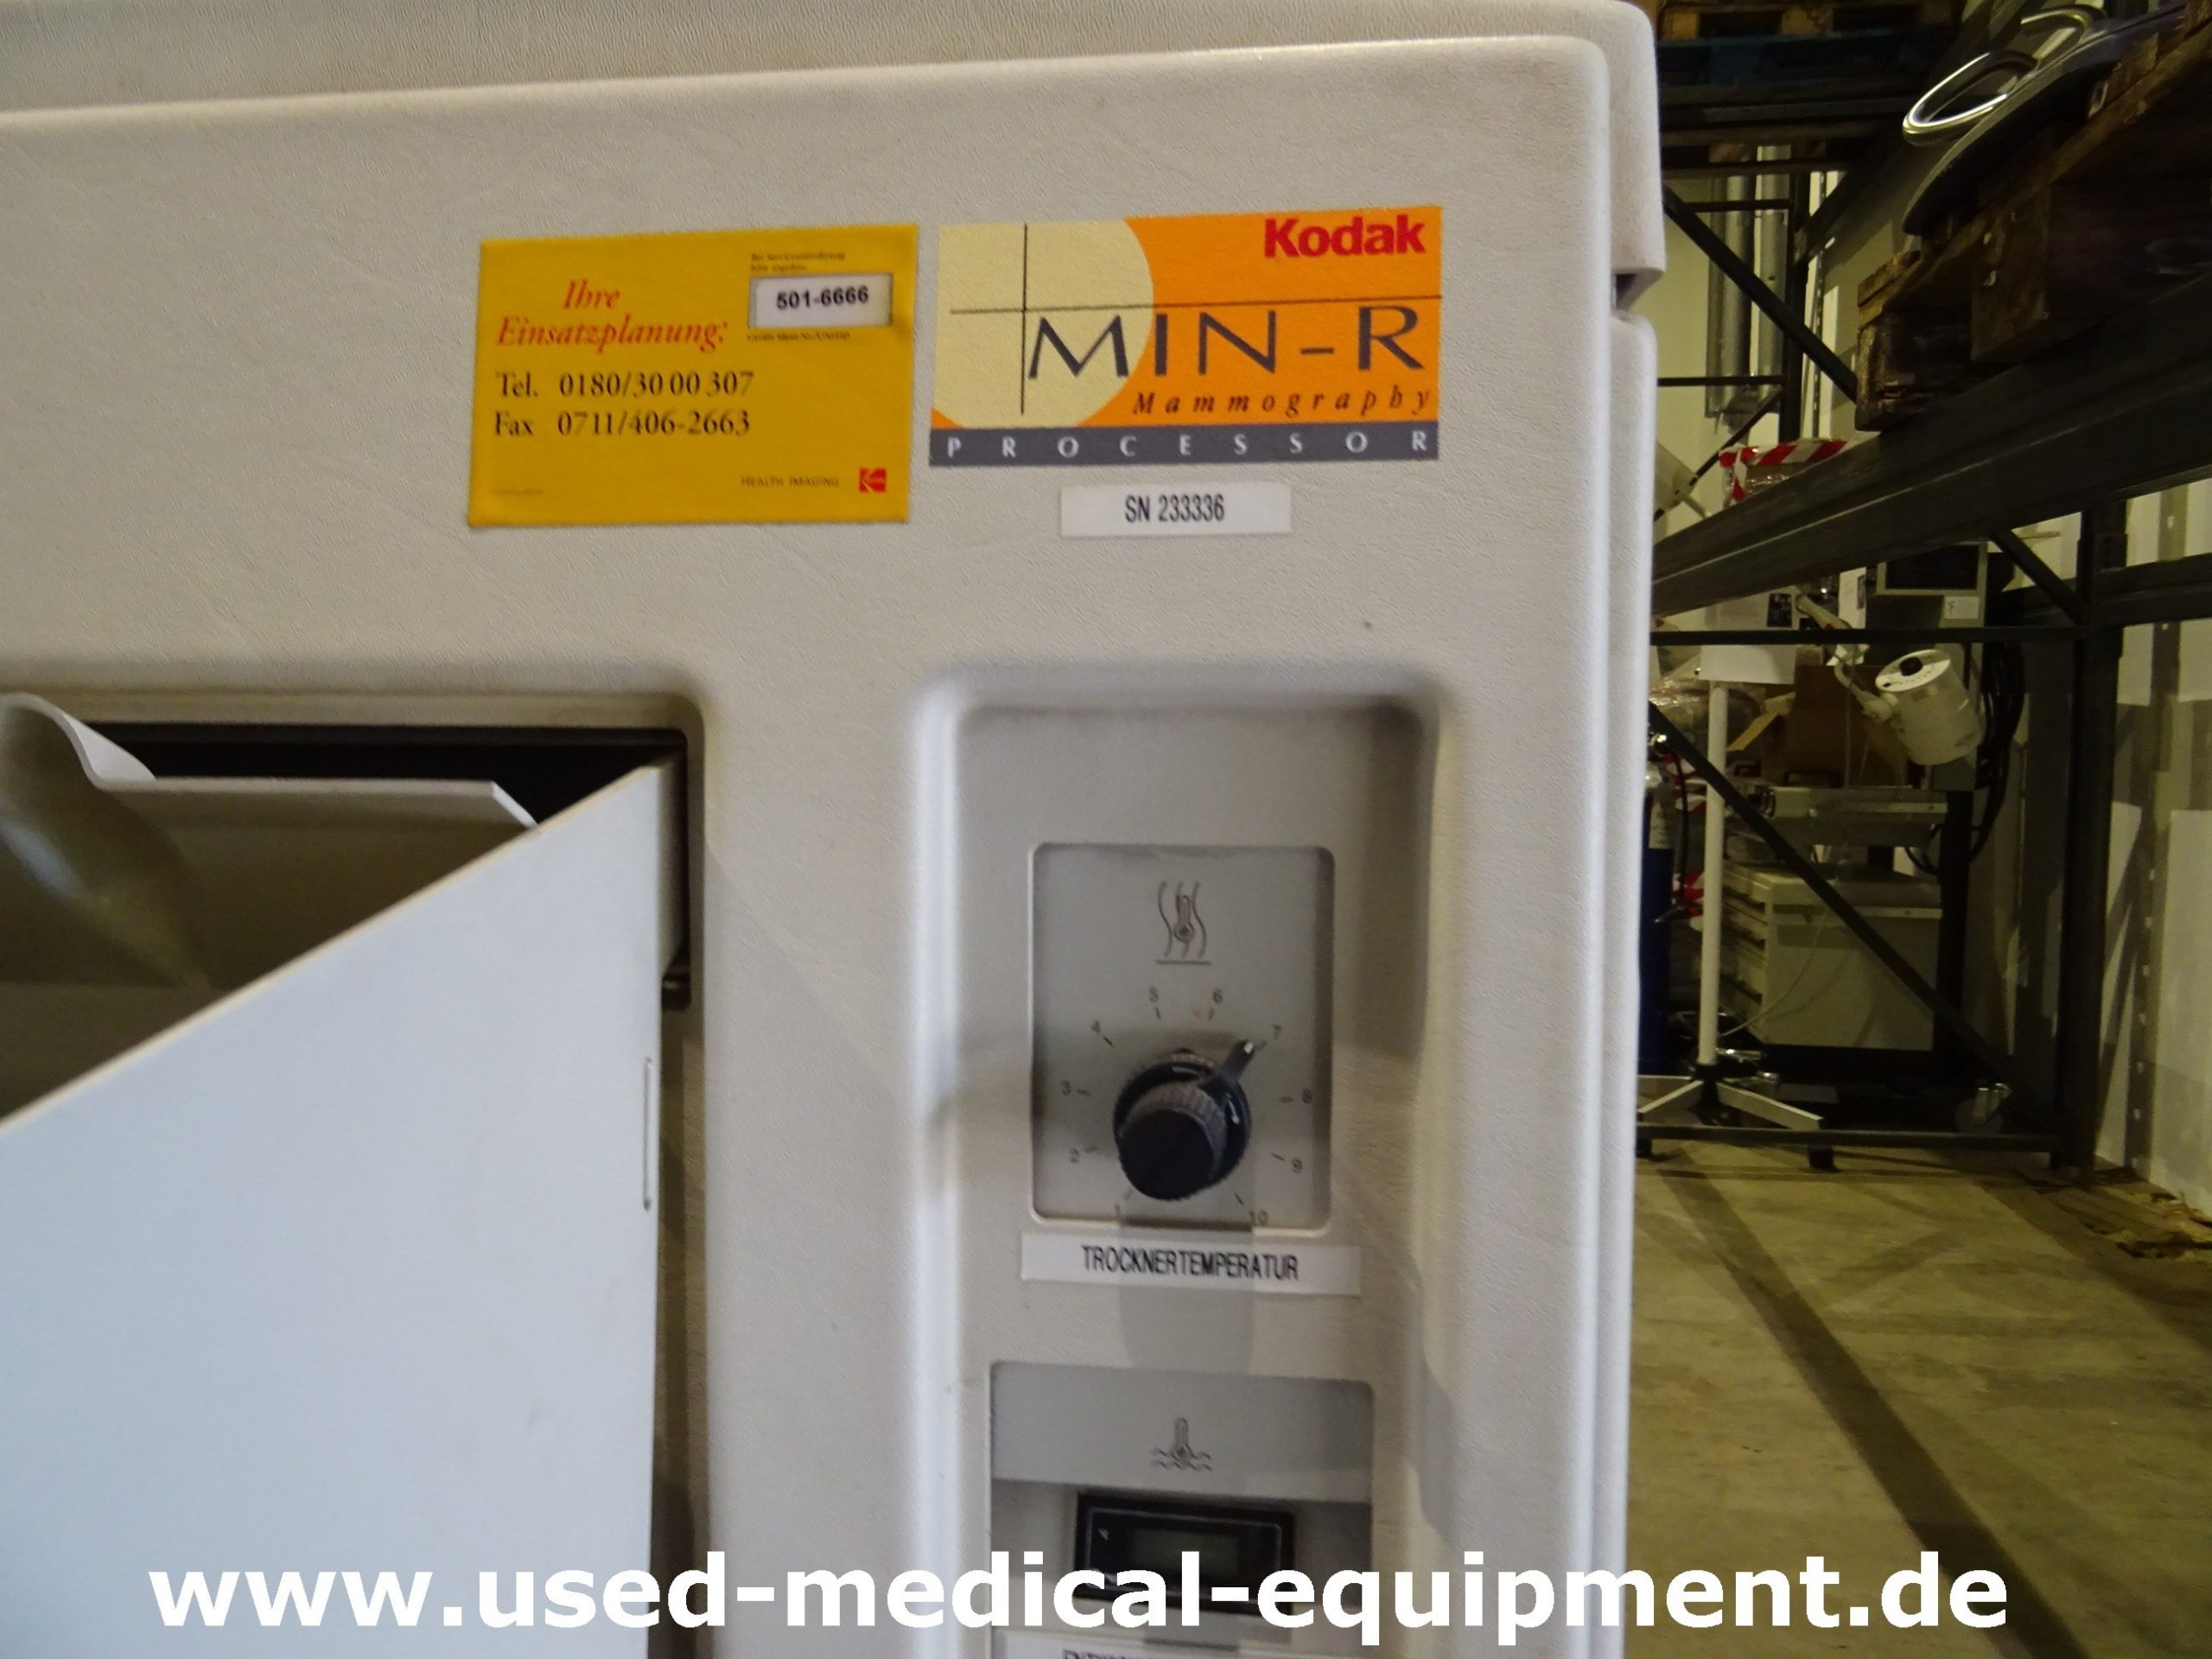 kodak-min-e-mammography-processor-1286